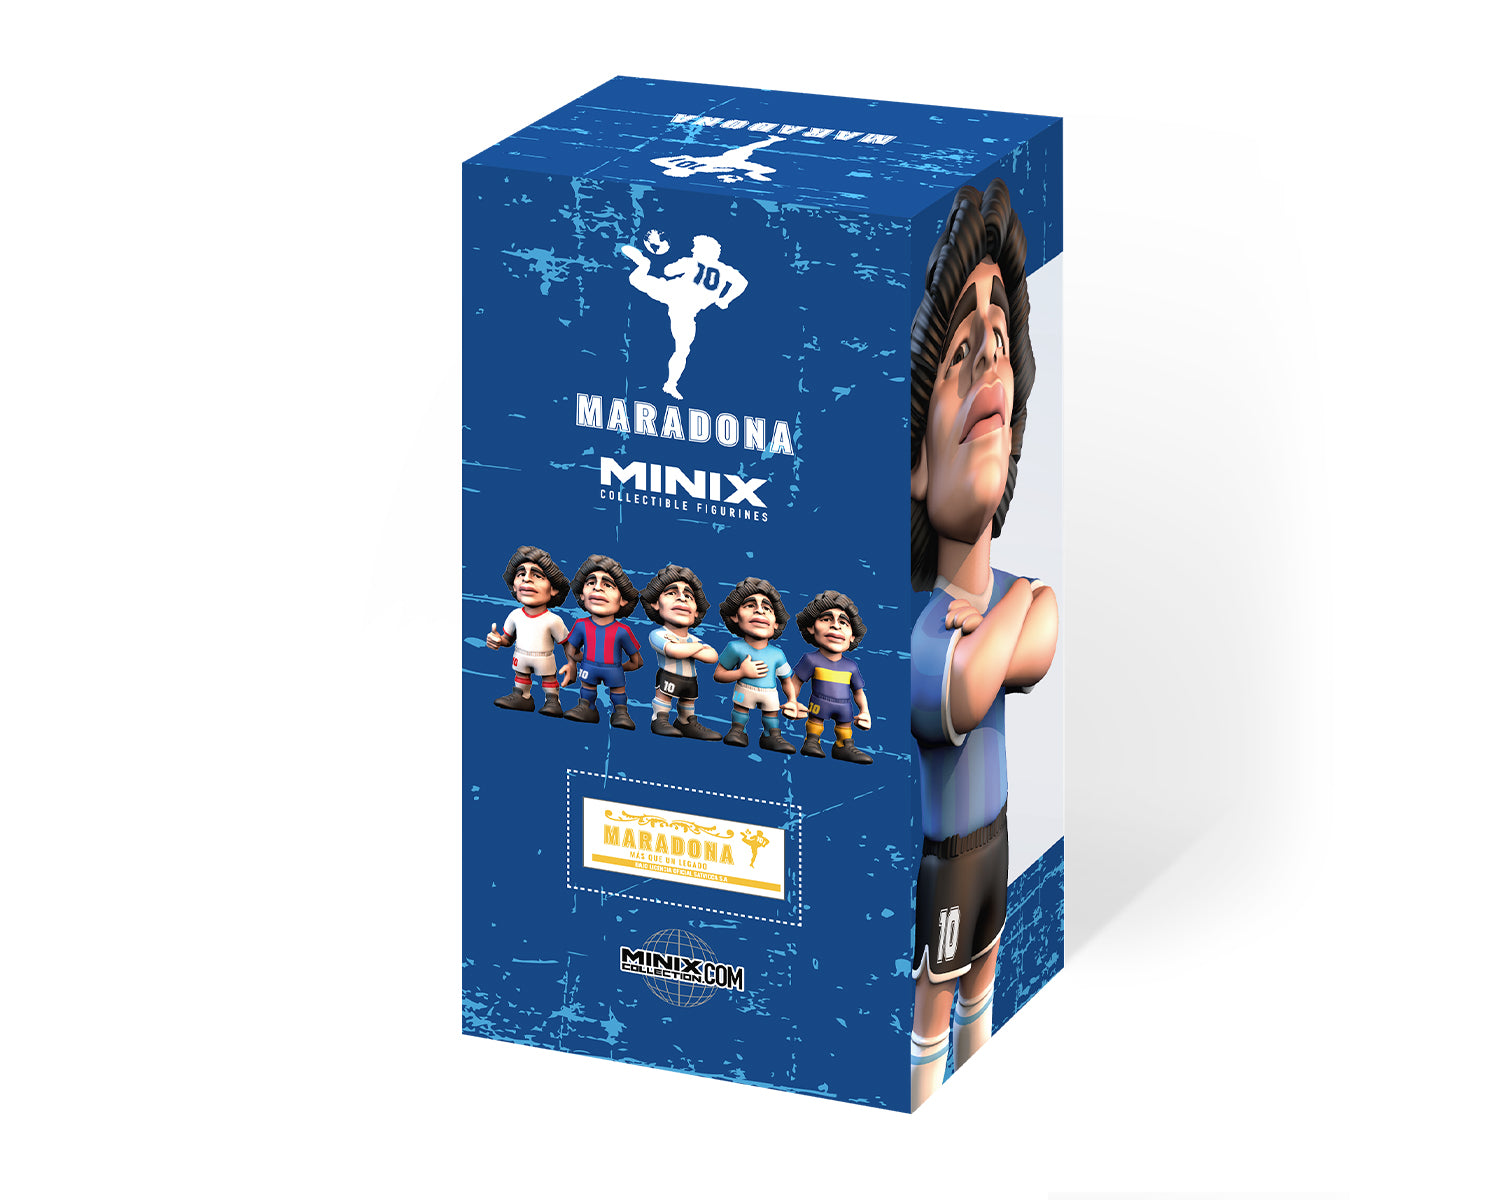 Minix -Football -MARADONA -BLUE AND YELLOW -Figurine -12 cm